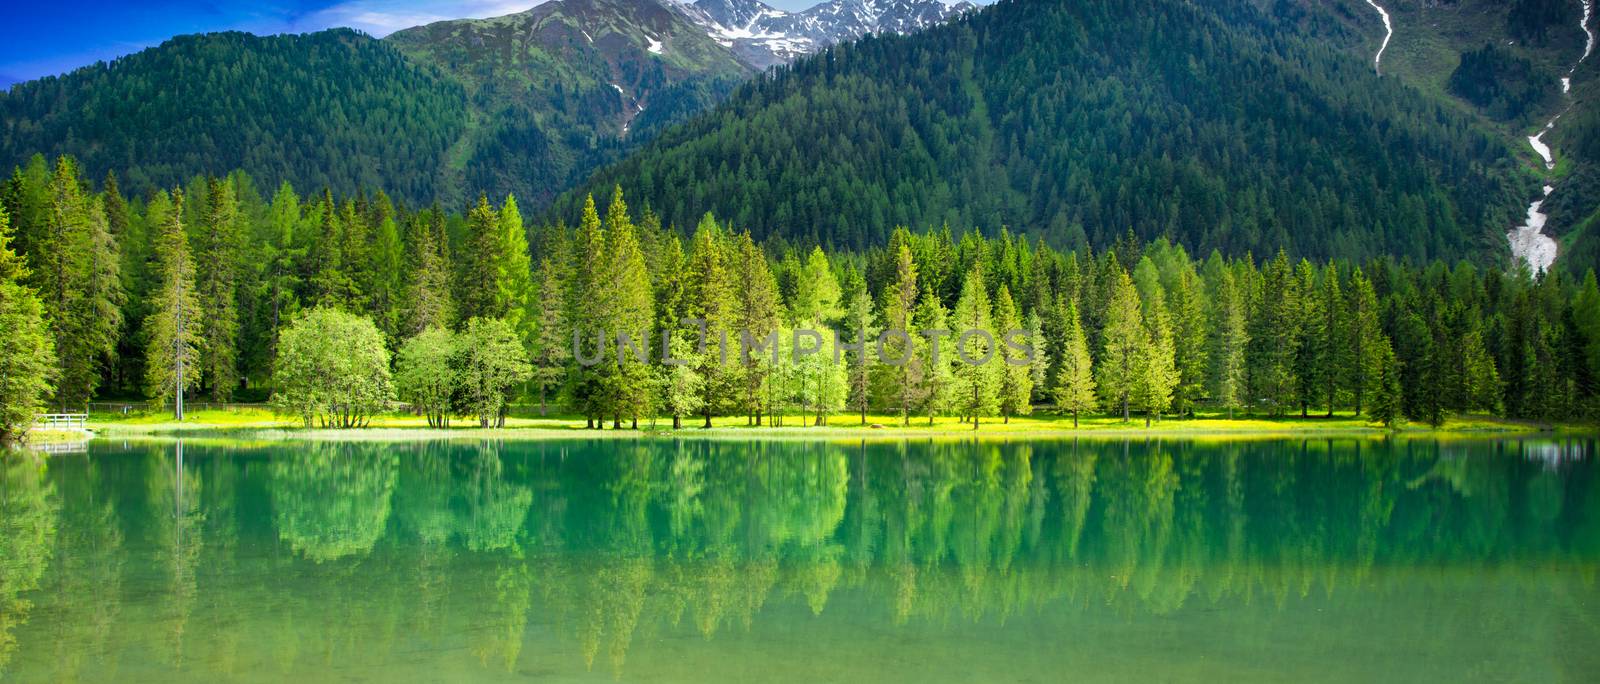 Beautiful view of an alpine lake